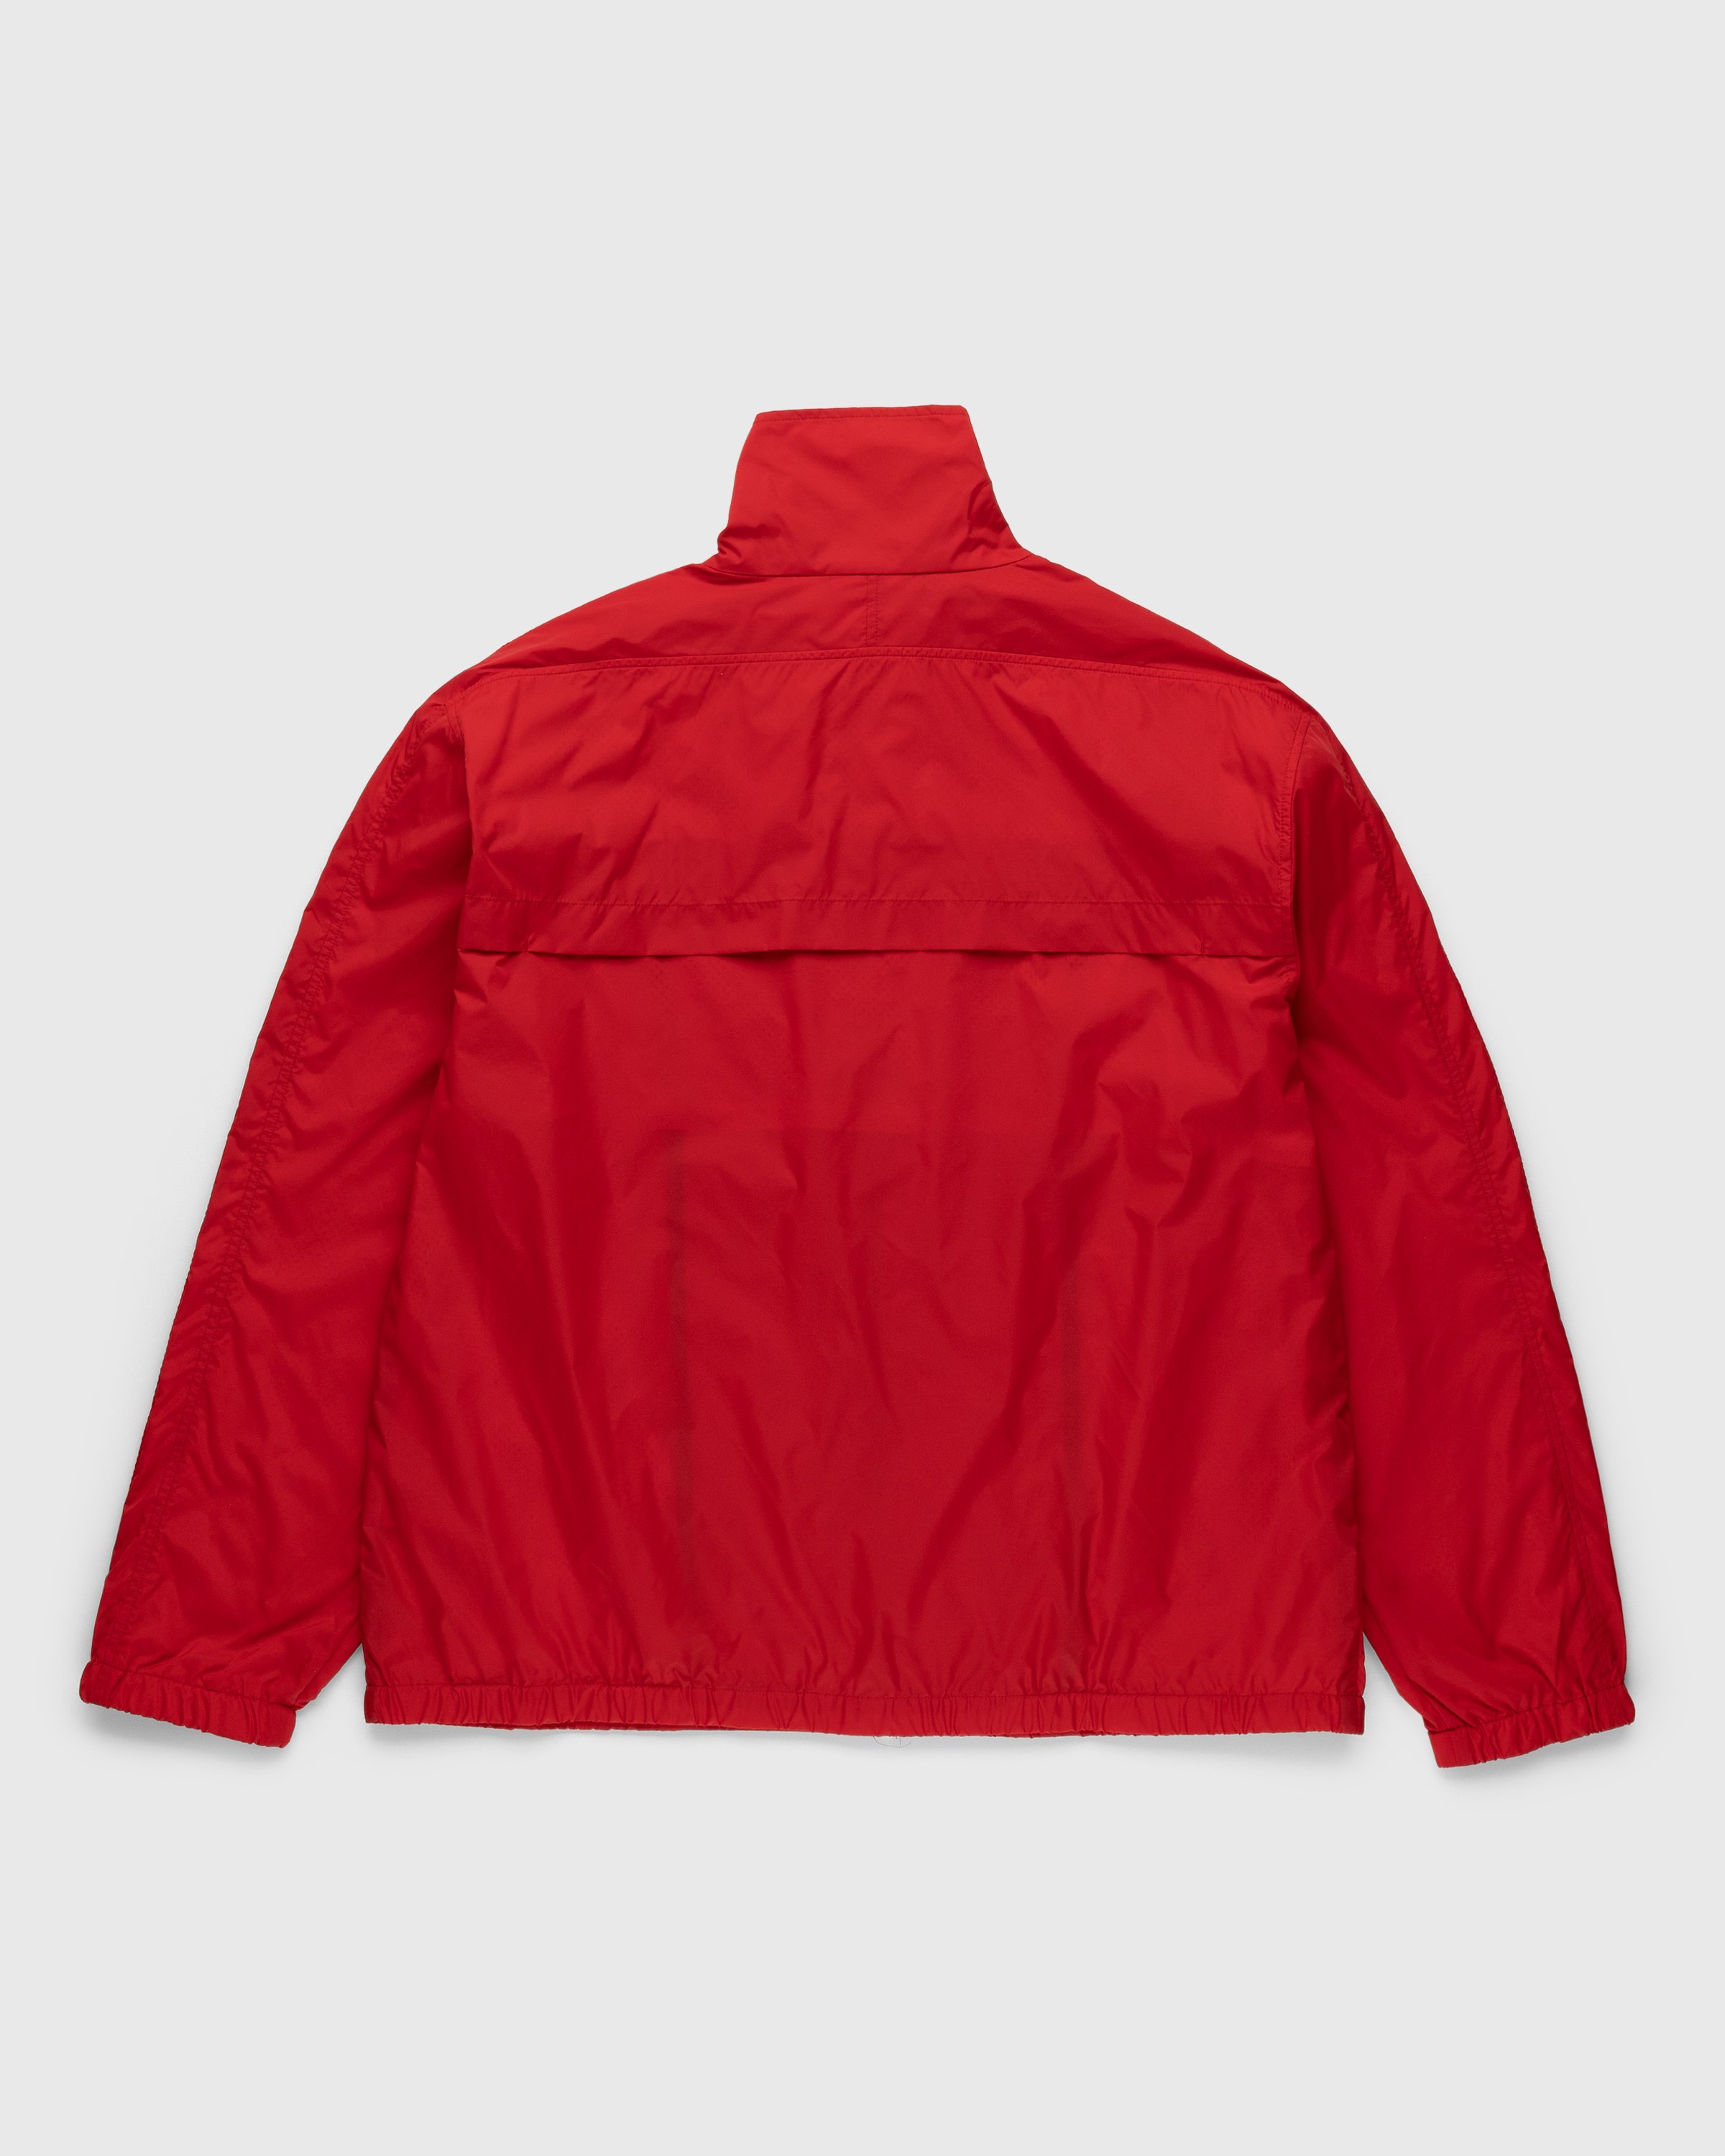 Adidas x Wales Bonner - WB Light Jacket Scarlet - Clothing - Red - Image 2